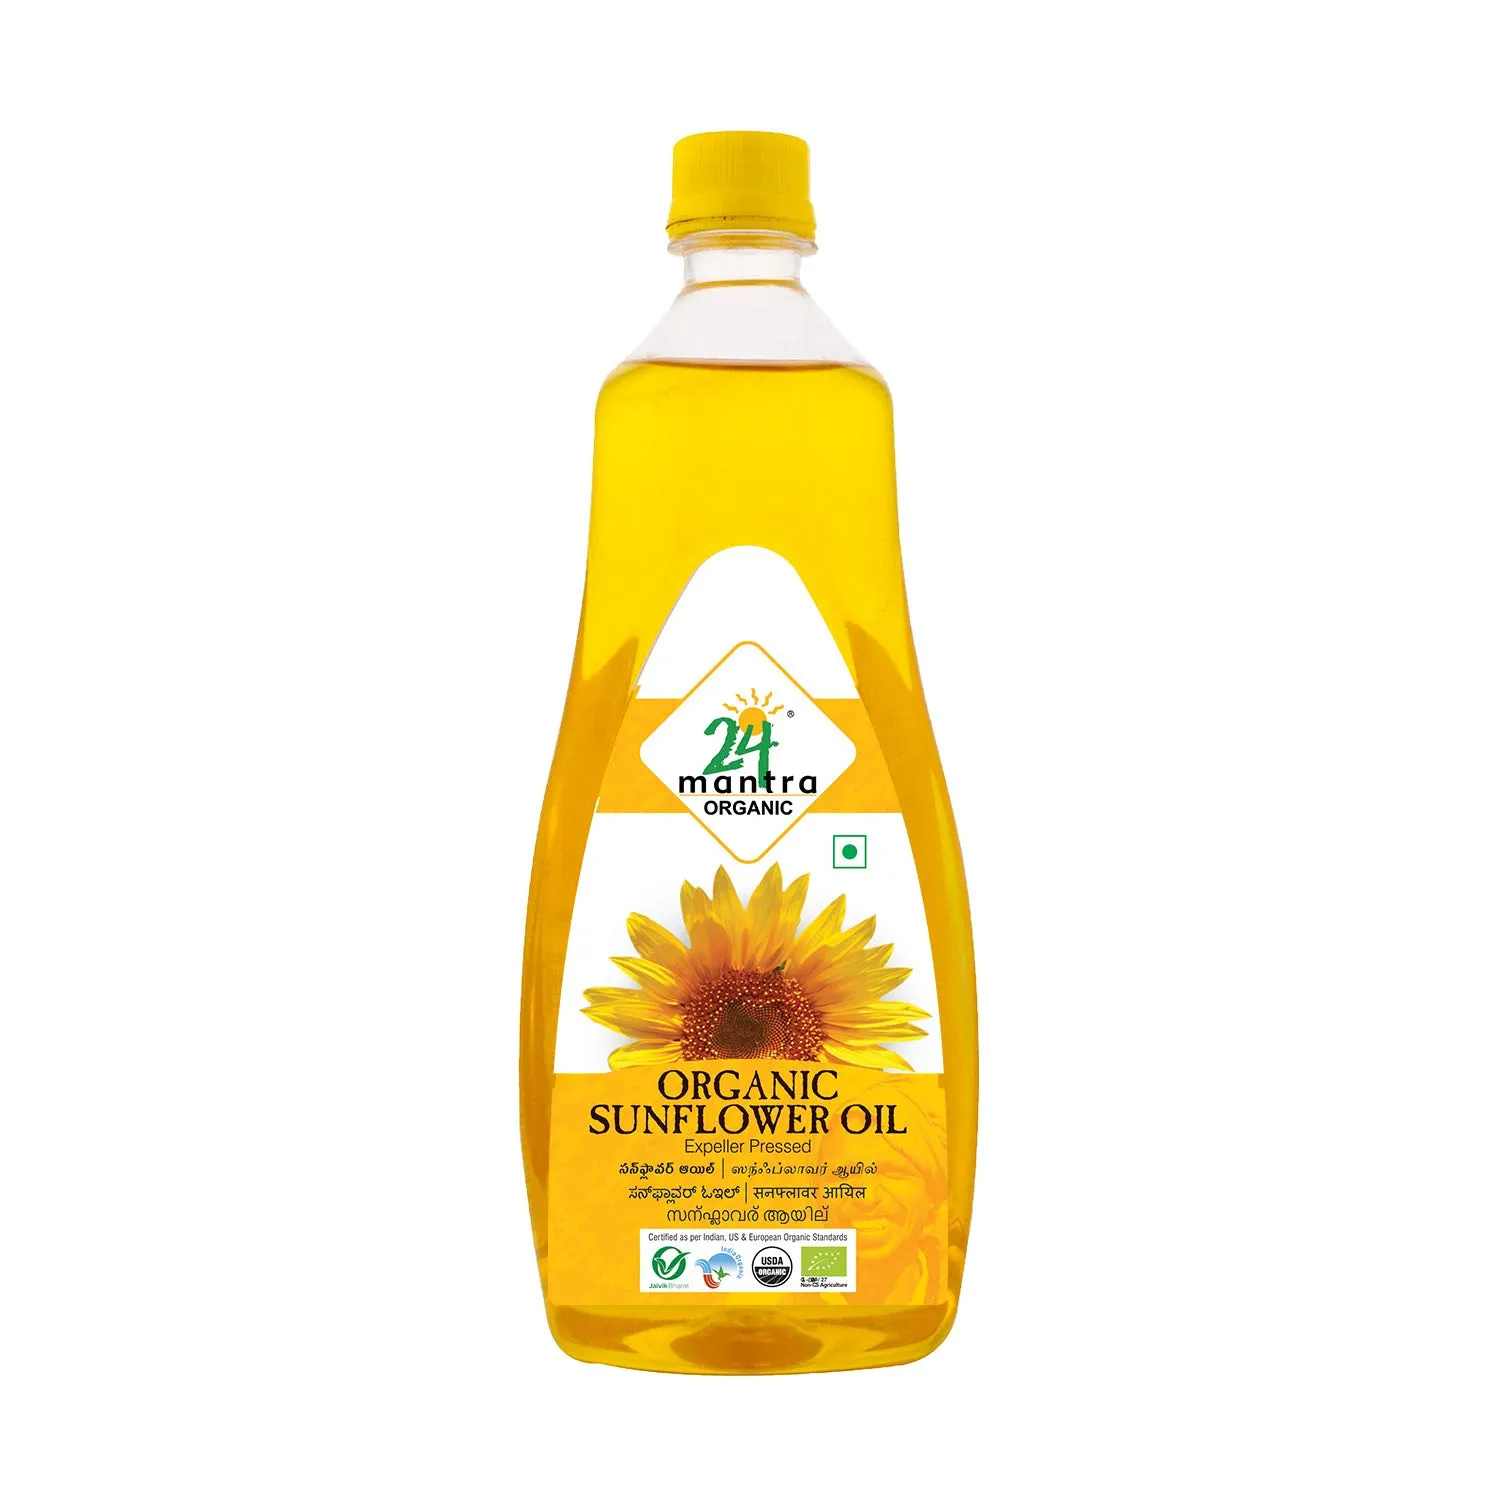 24 Mantra Organic Sunflower Oil 1 LT